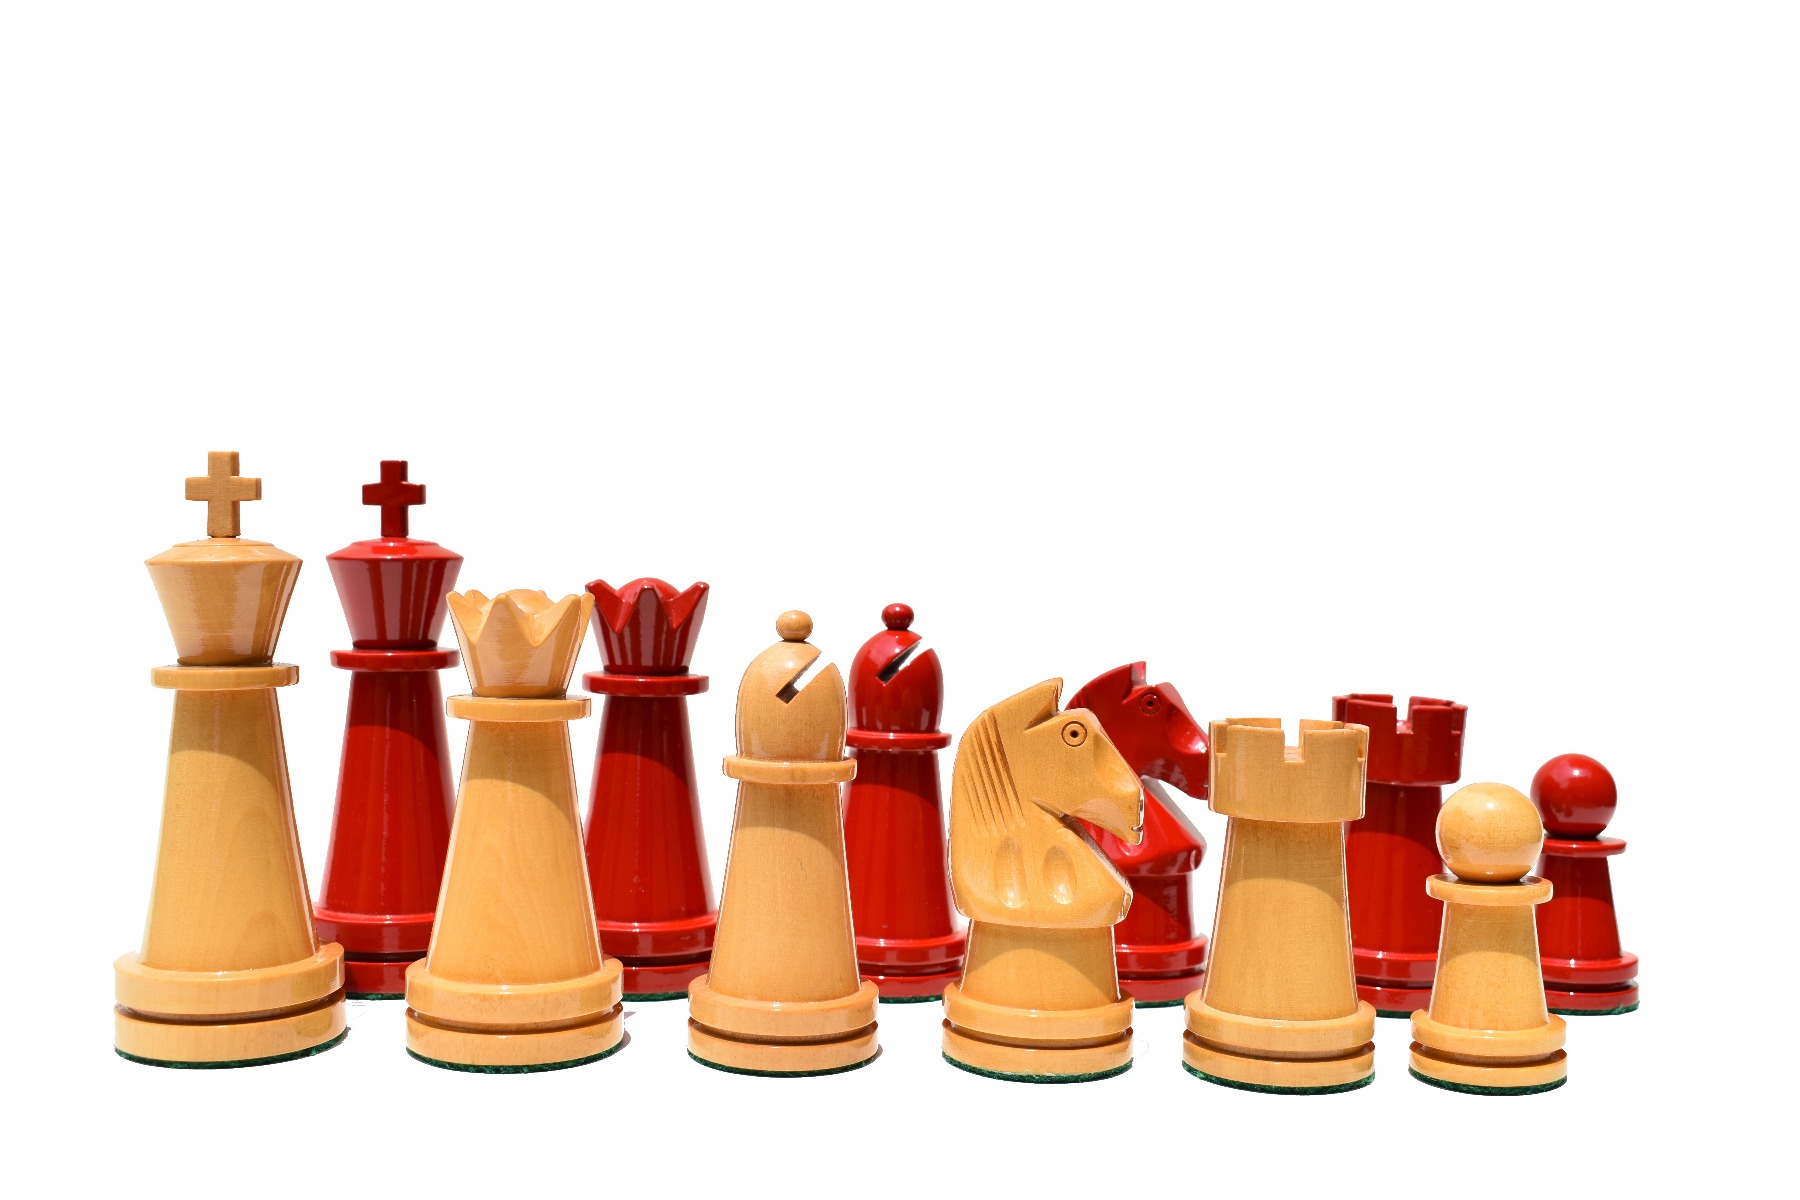 Chess and Life, Magnus Carlsen.  Magnus carlsen, Chess board, Magnus